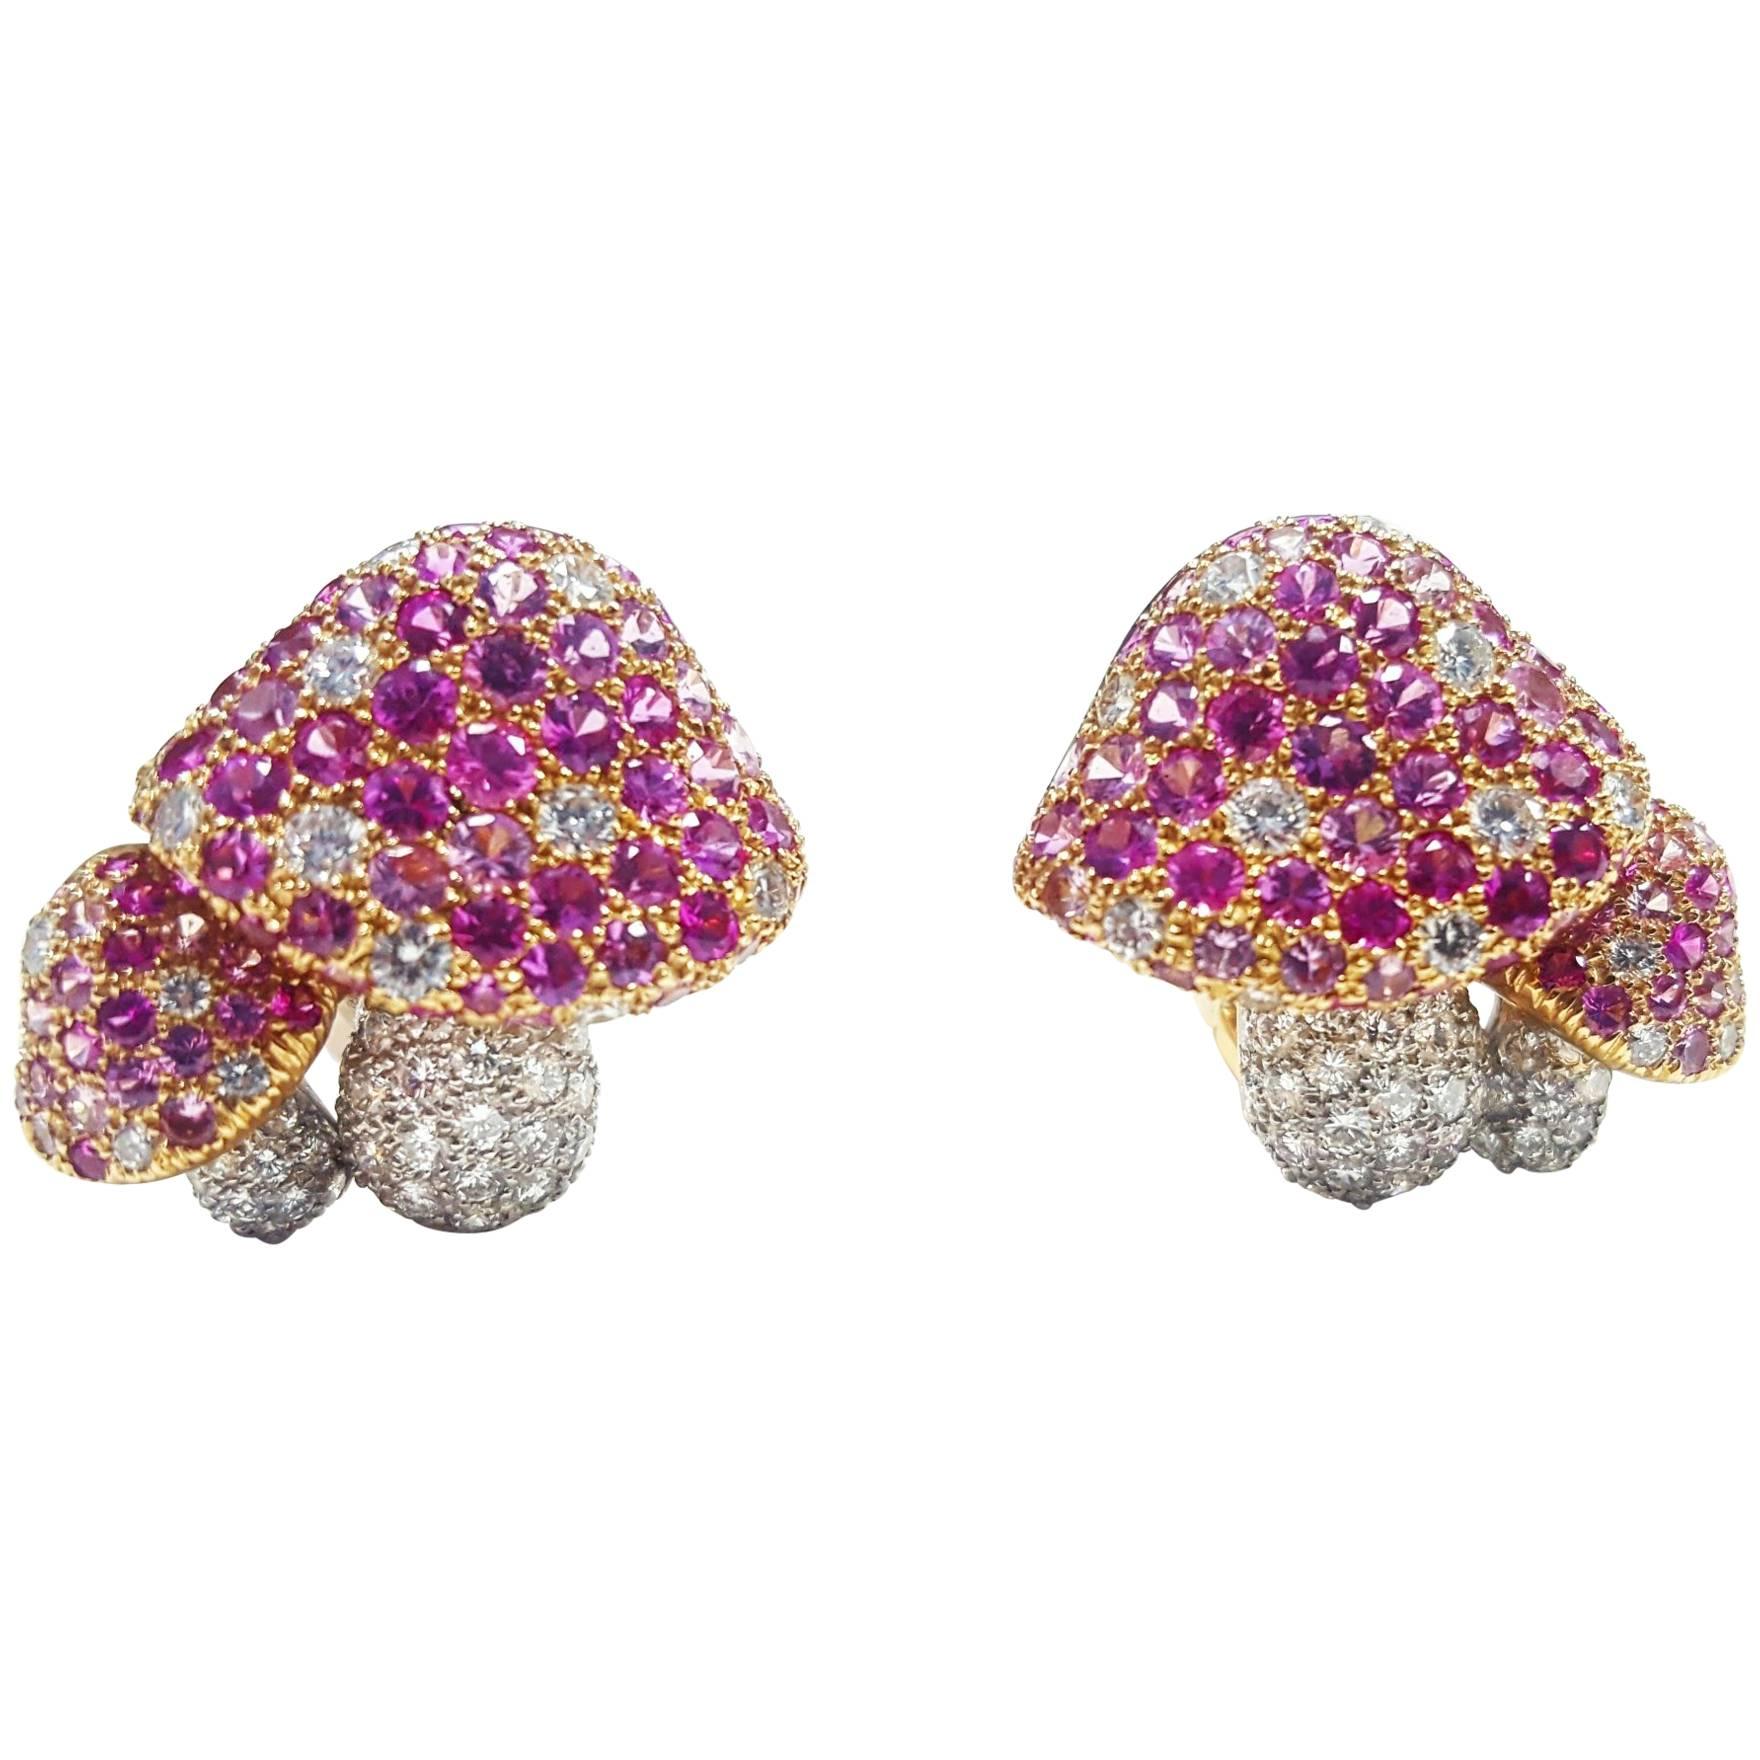 Tiffany & Co. Mushroom Diamond Pink Sapphire Earrings